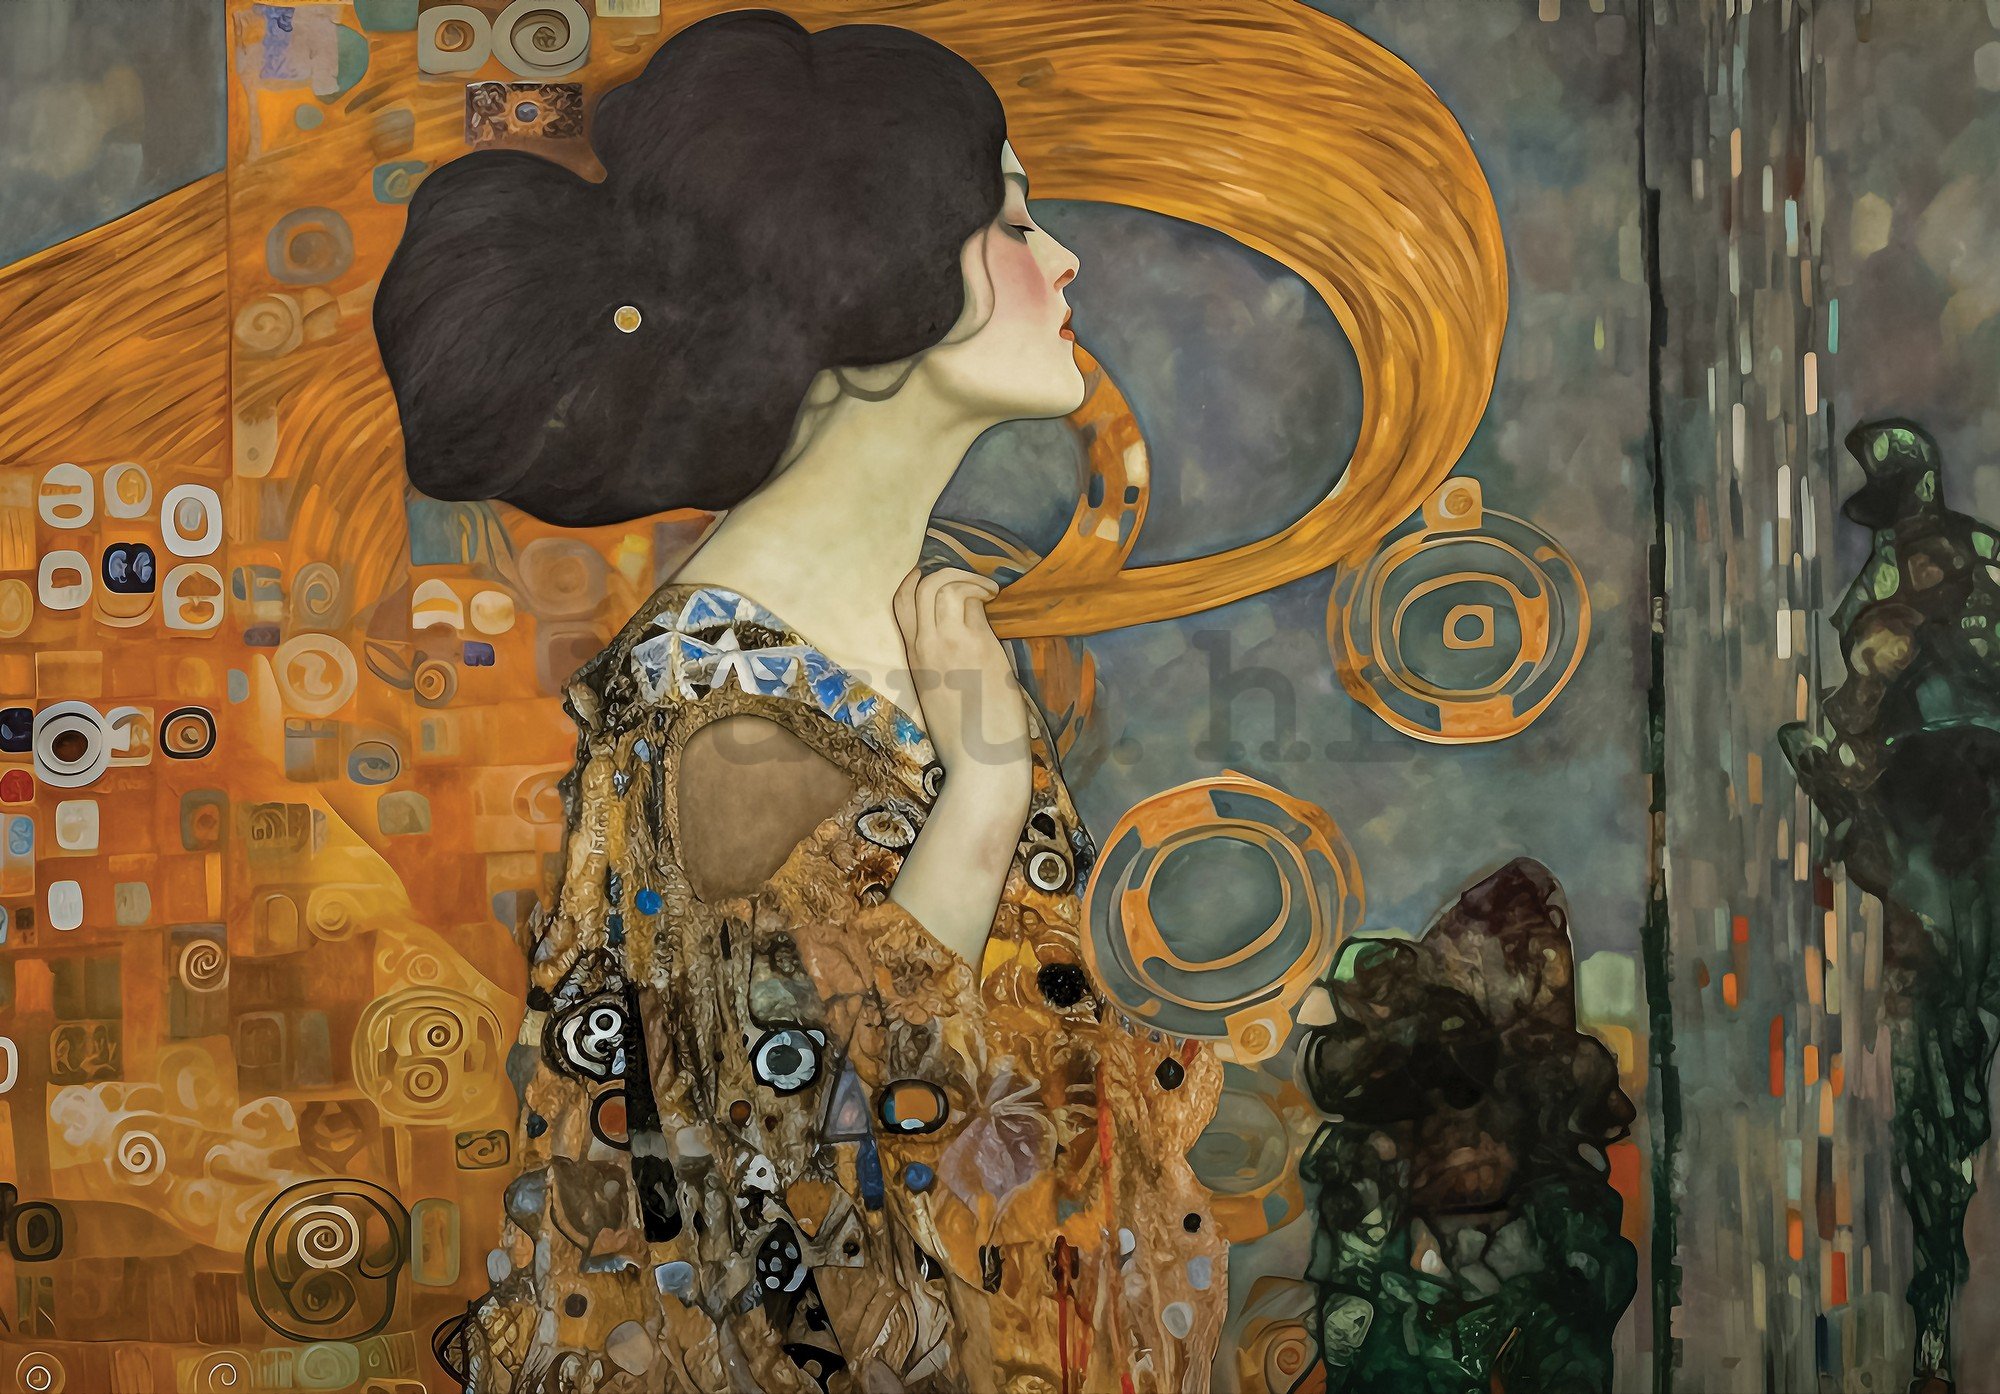 Vlies foto tapeta: Imitation painting woman Klimt - 312x219cm